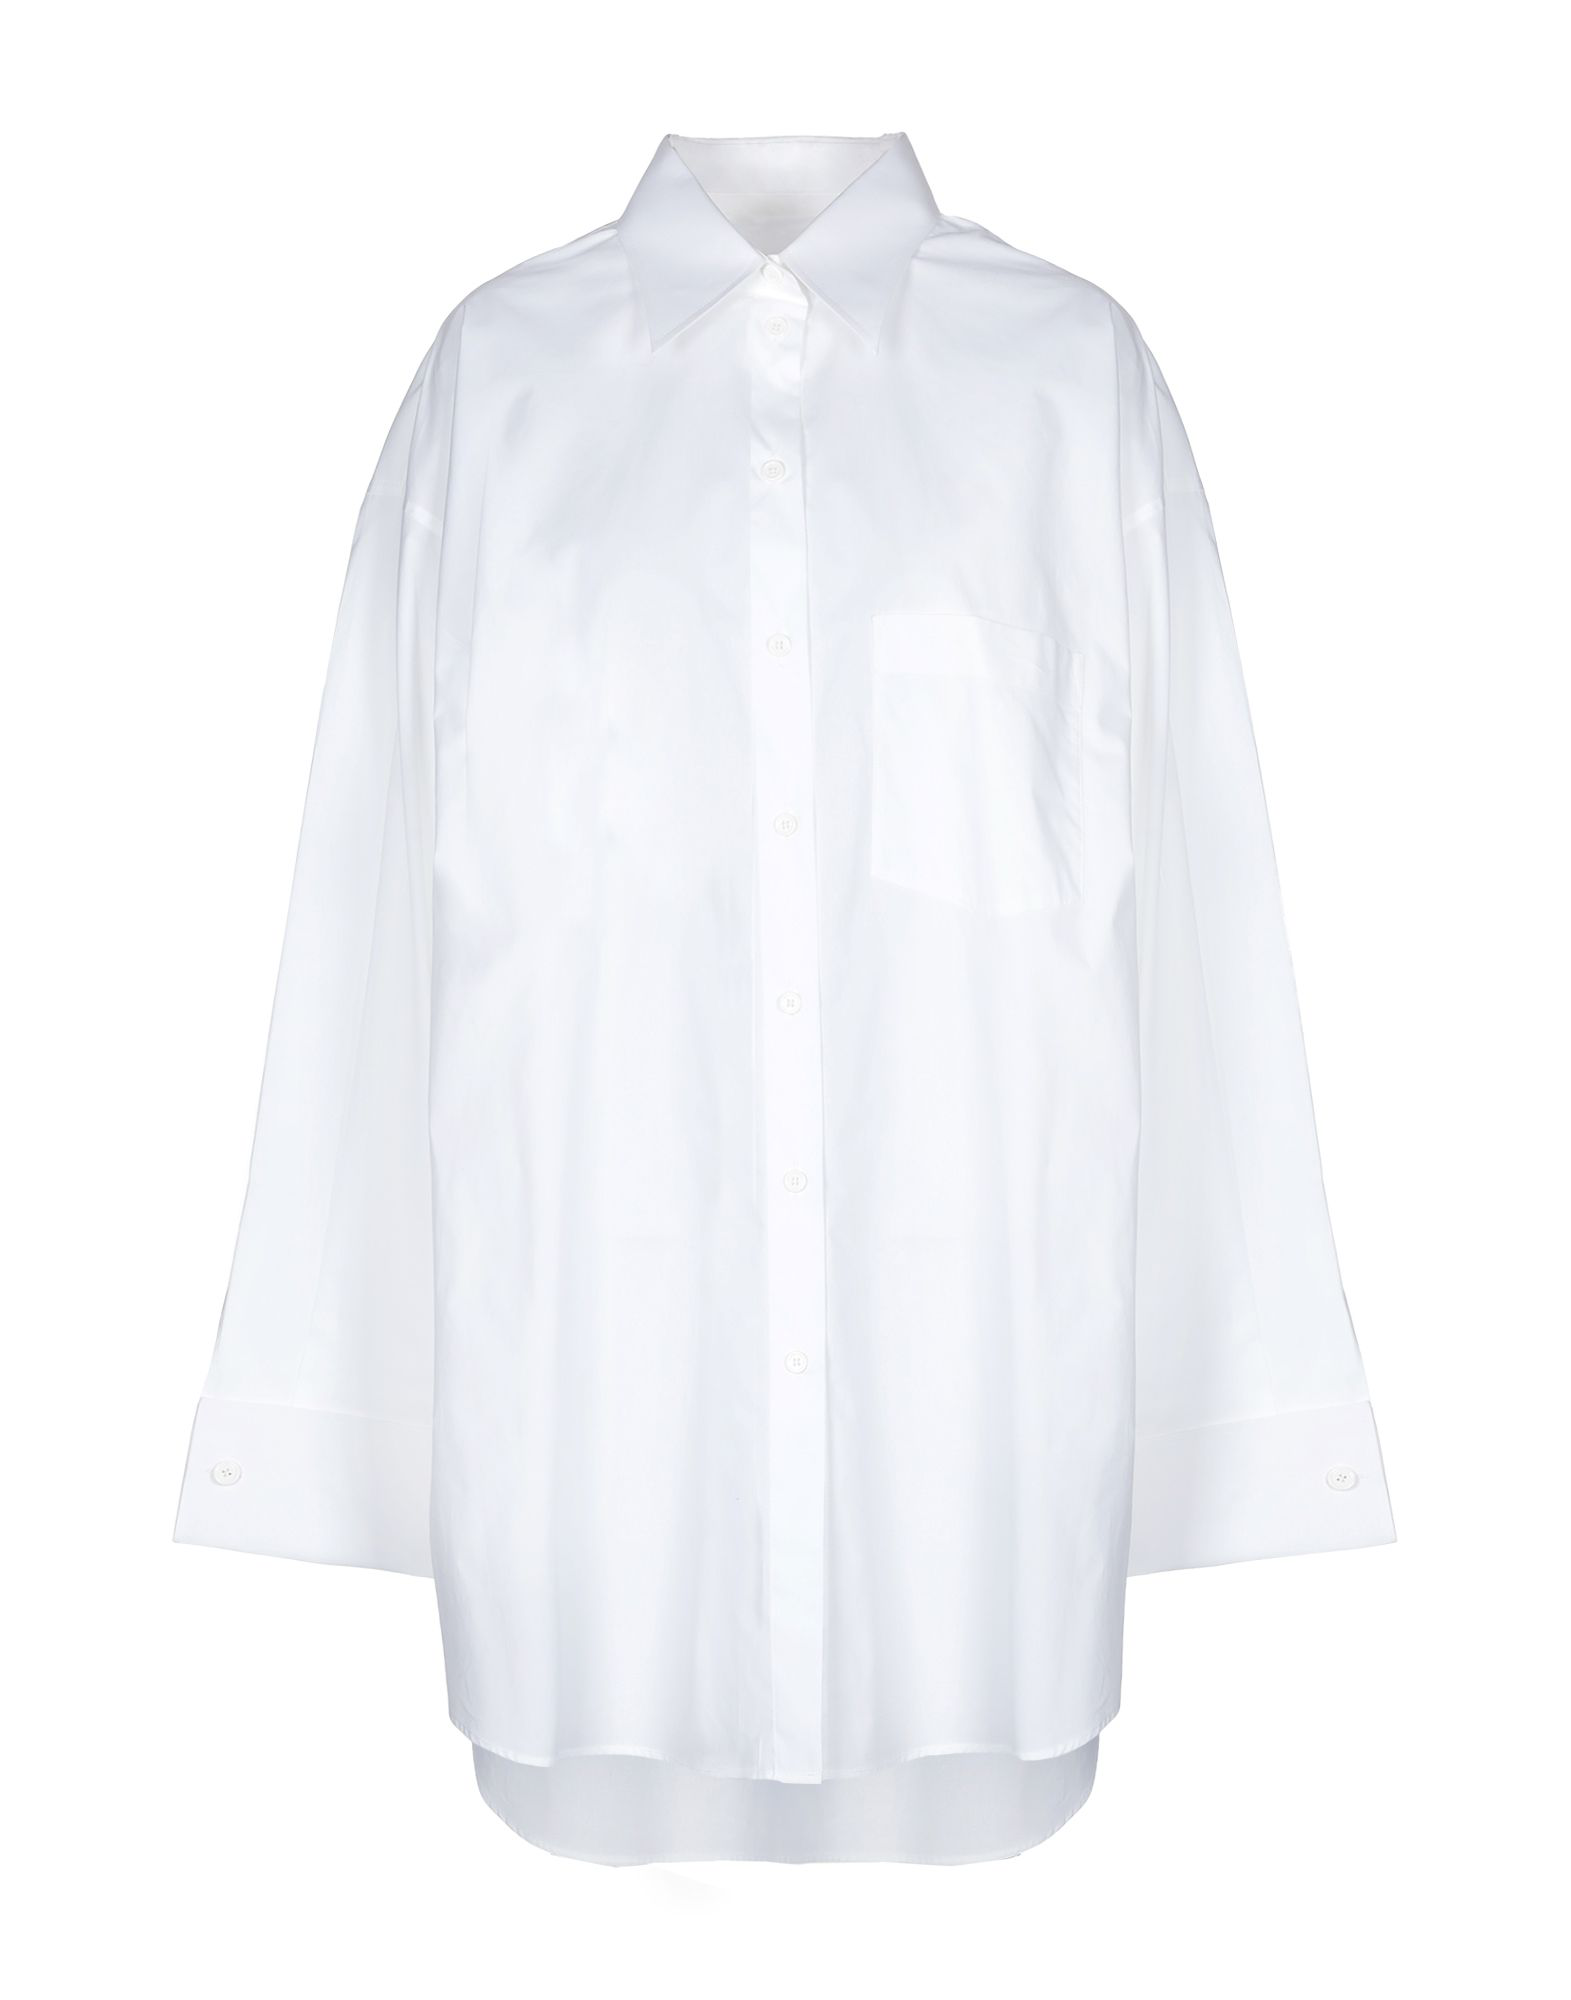 Mm6 Maison Margiela Shirts In White | ModeSens